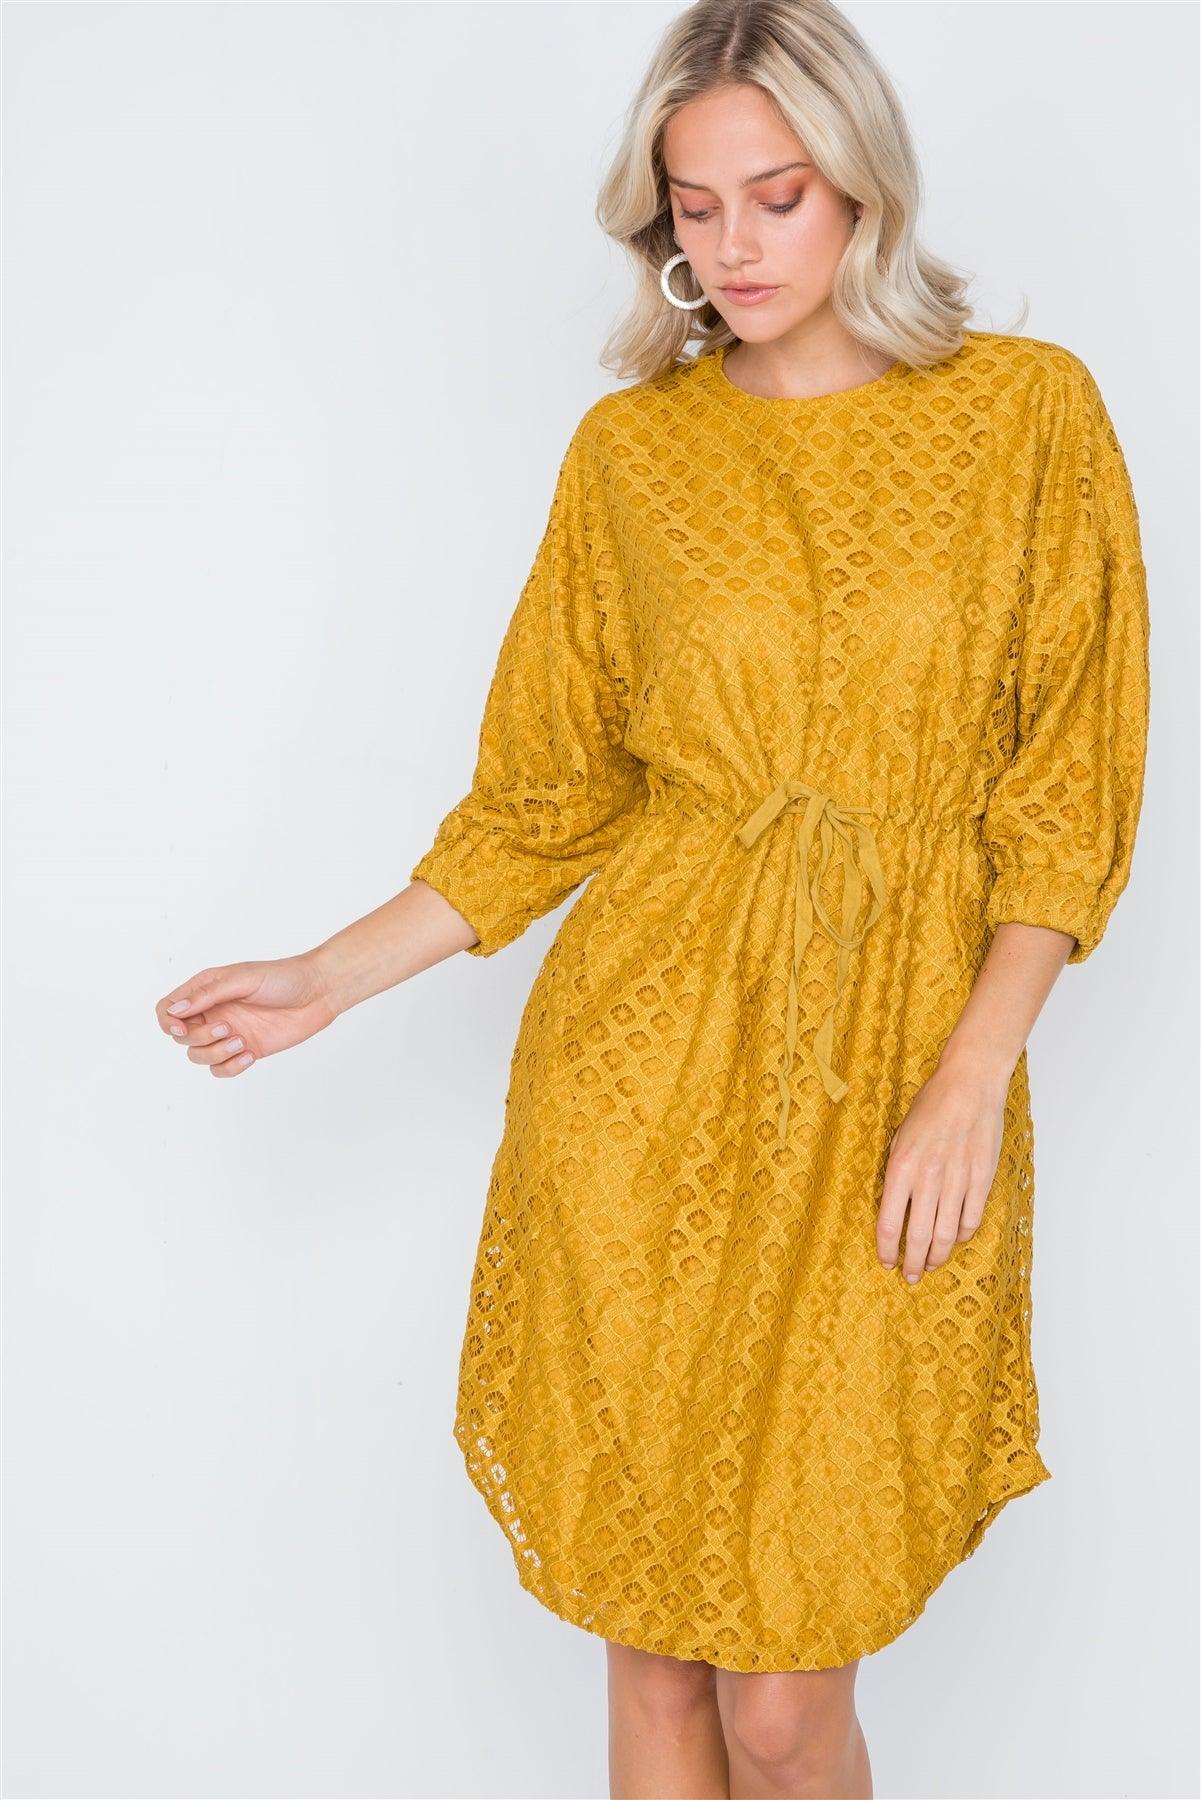 Mustard 3/4 Sleeve Patterned Lace Shift Dress /4-2-1